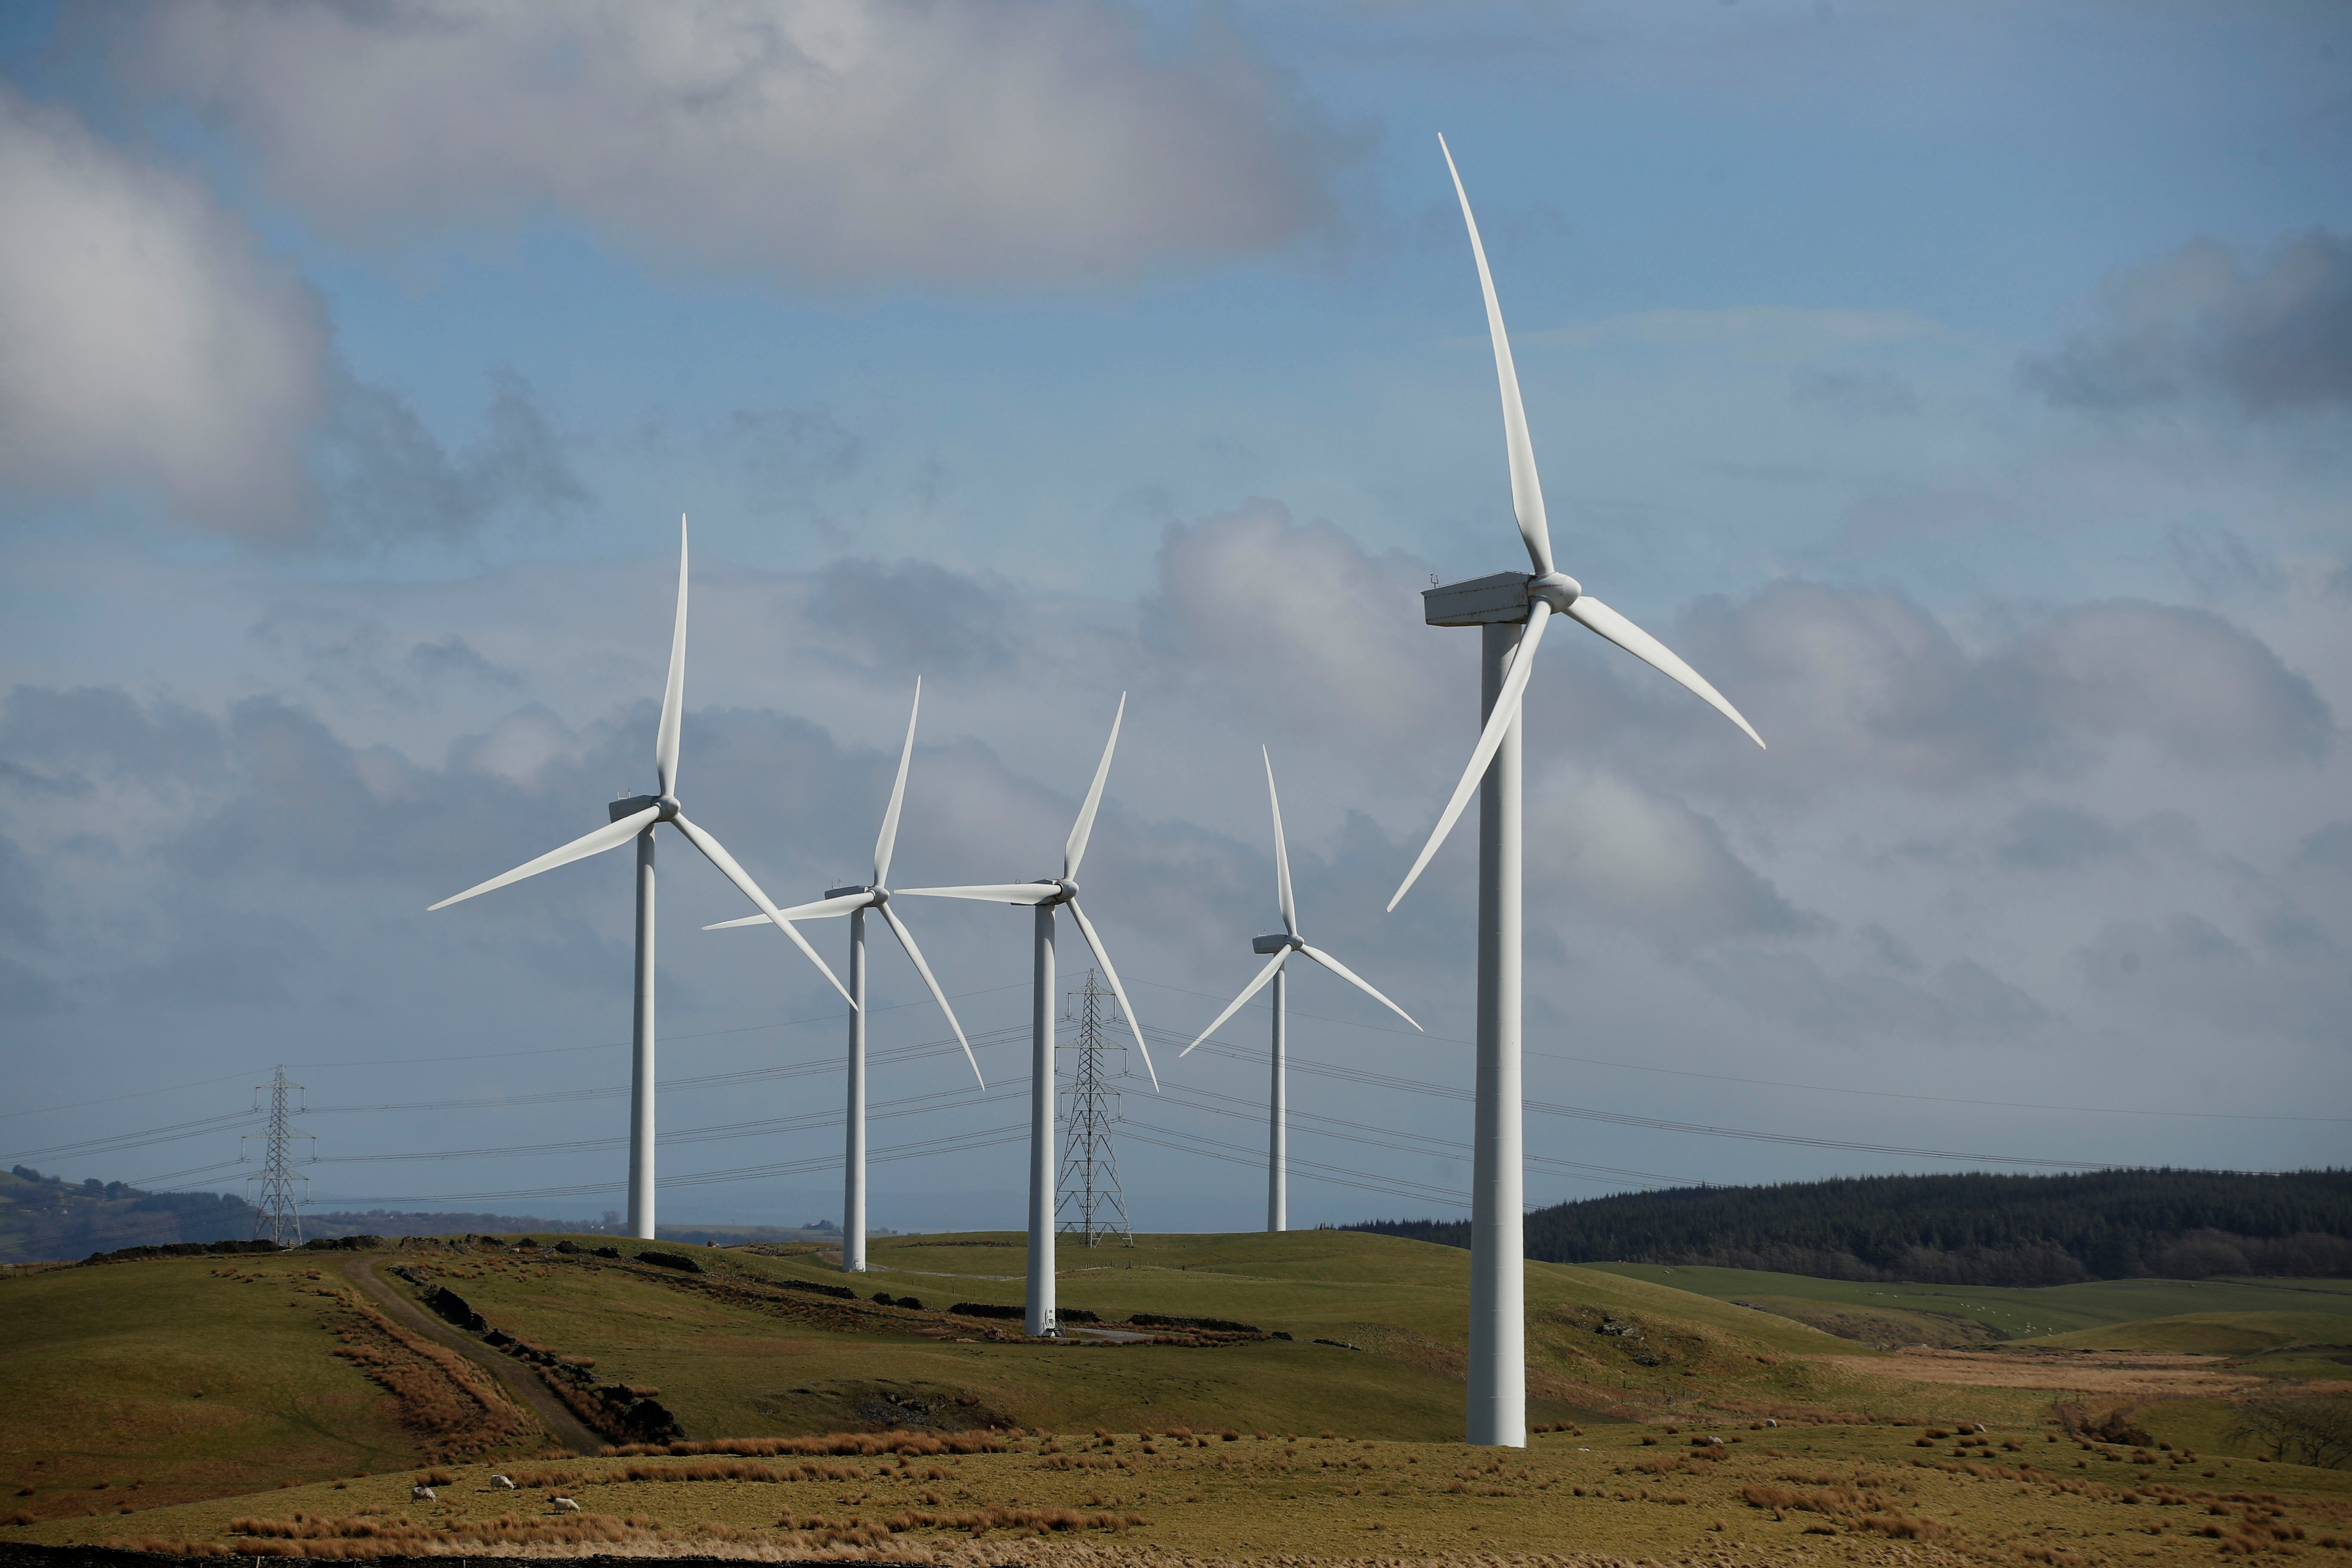 Wind turbines are seen at Mynydd Portref Wind Farm near Hendreforgan in South Wales, Britain, March 26, 2021. REUTERS/Matthew Childs